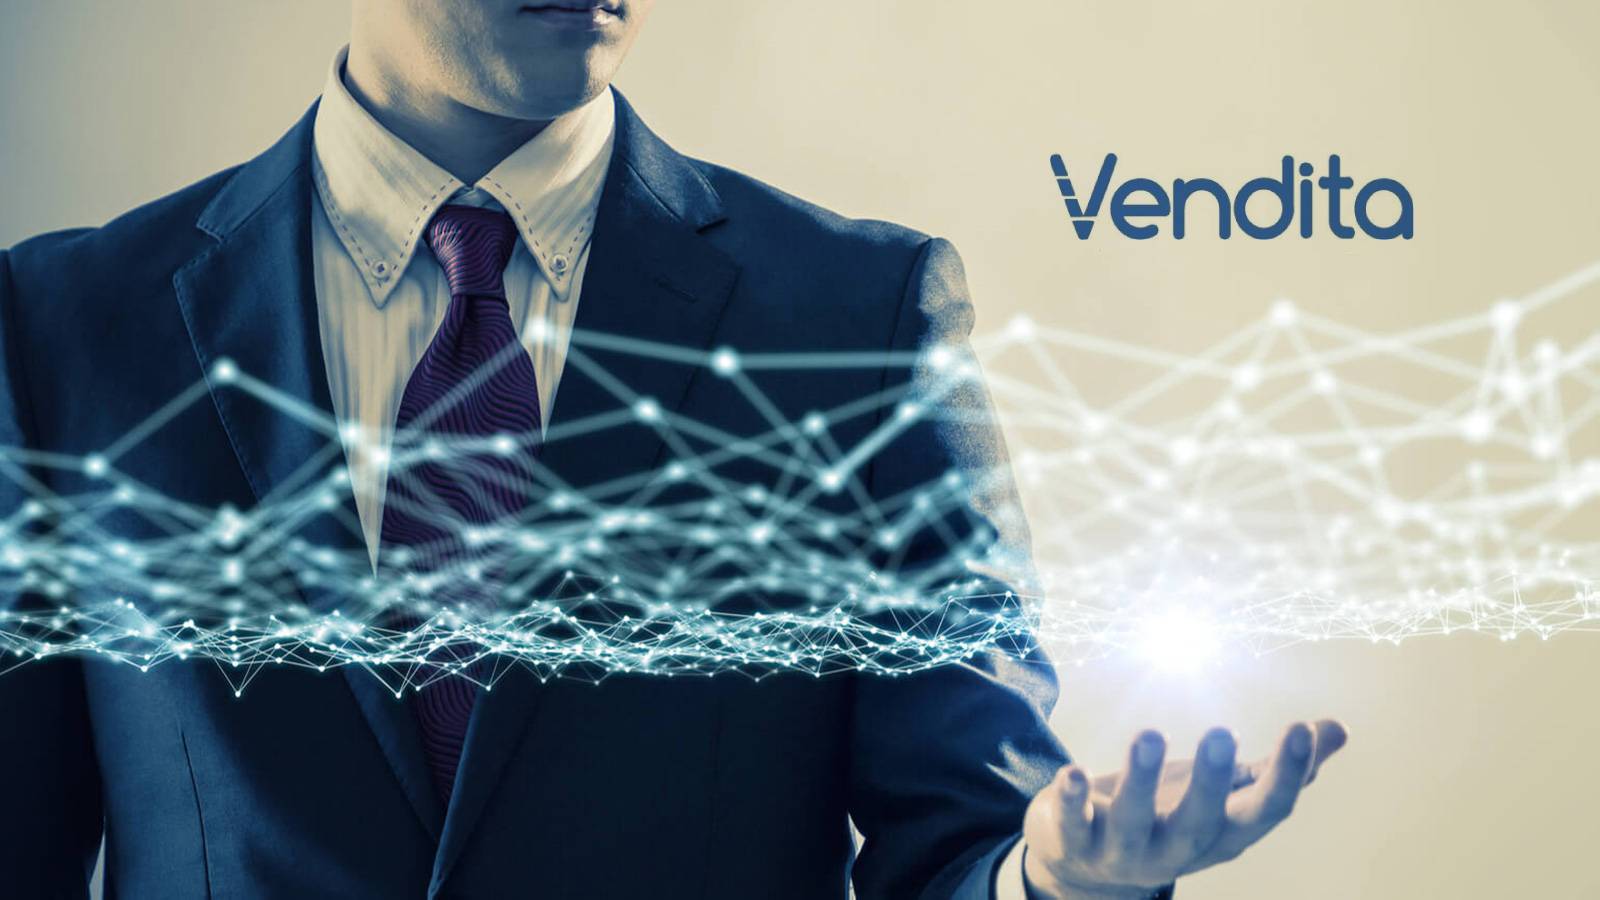 Vendita Technology Hires Dan Heckman as New Chief Revenue Officer